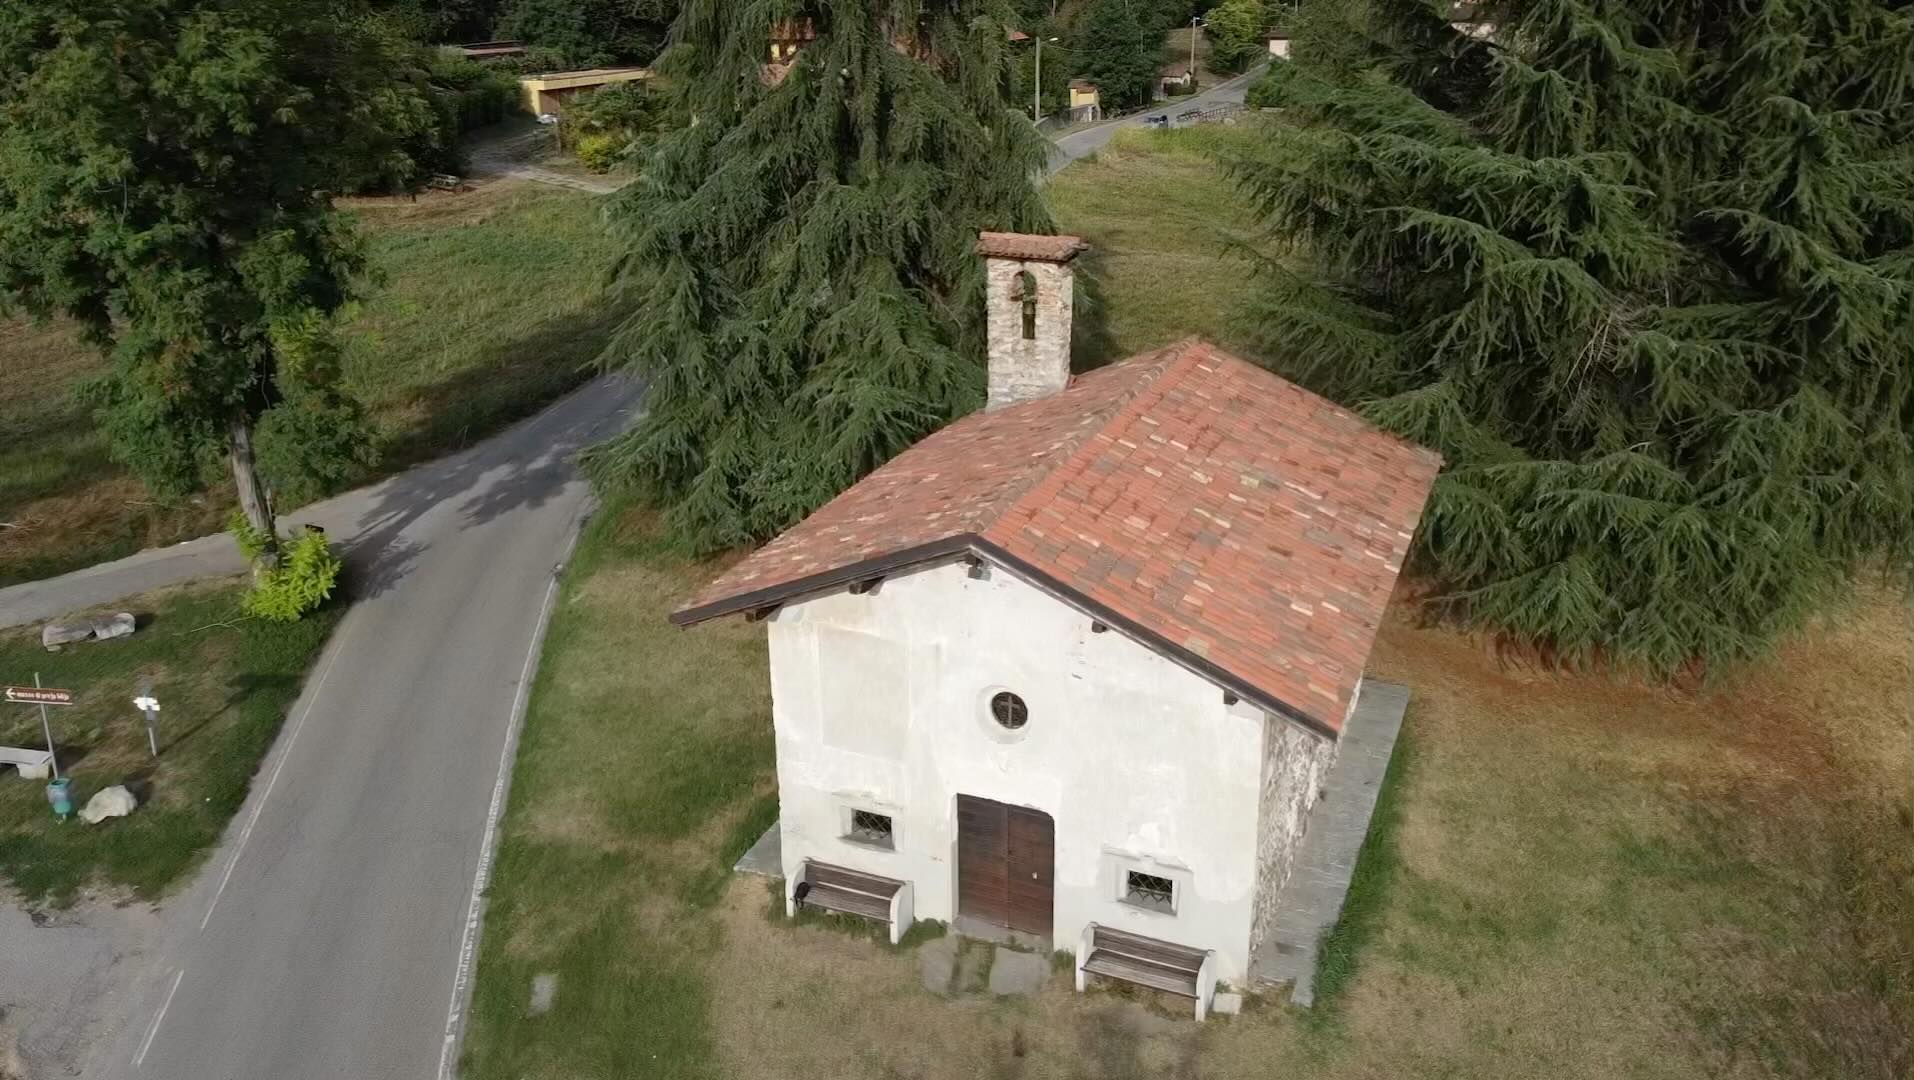 Oratorio di San Vincenzo, Sesto Calende (VA)

#sestocalende #drone #dronephotography #dronestagram #dronepilot #dronelife #igersitalia #dji #djimini2 #igers_lombardia #igers_varese